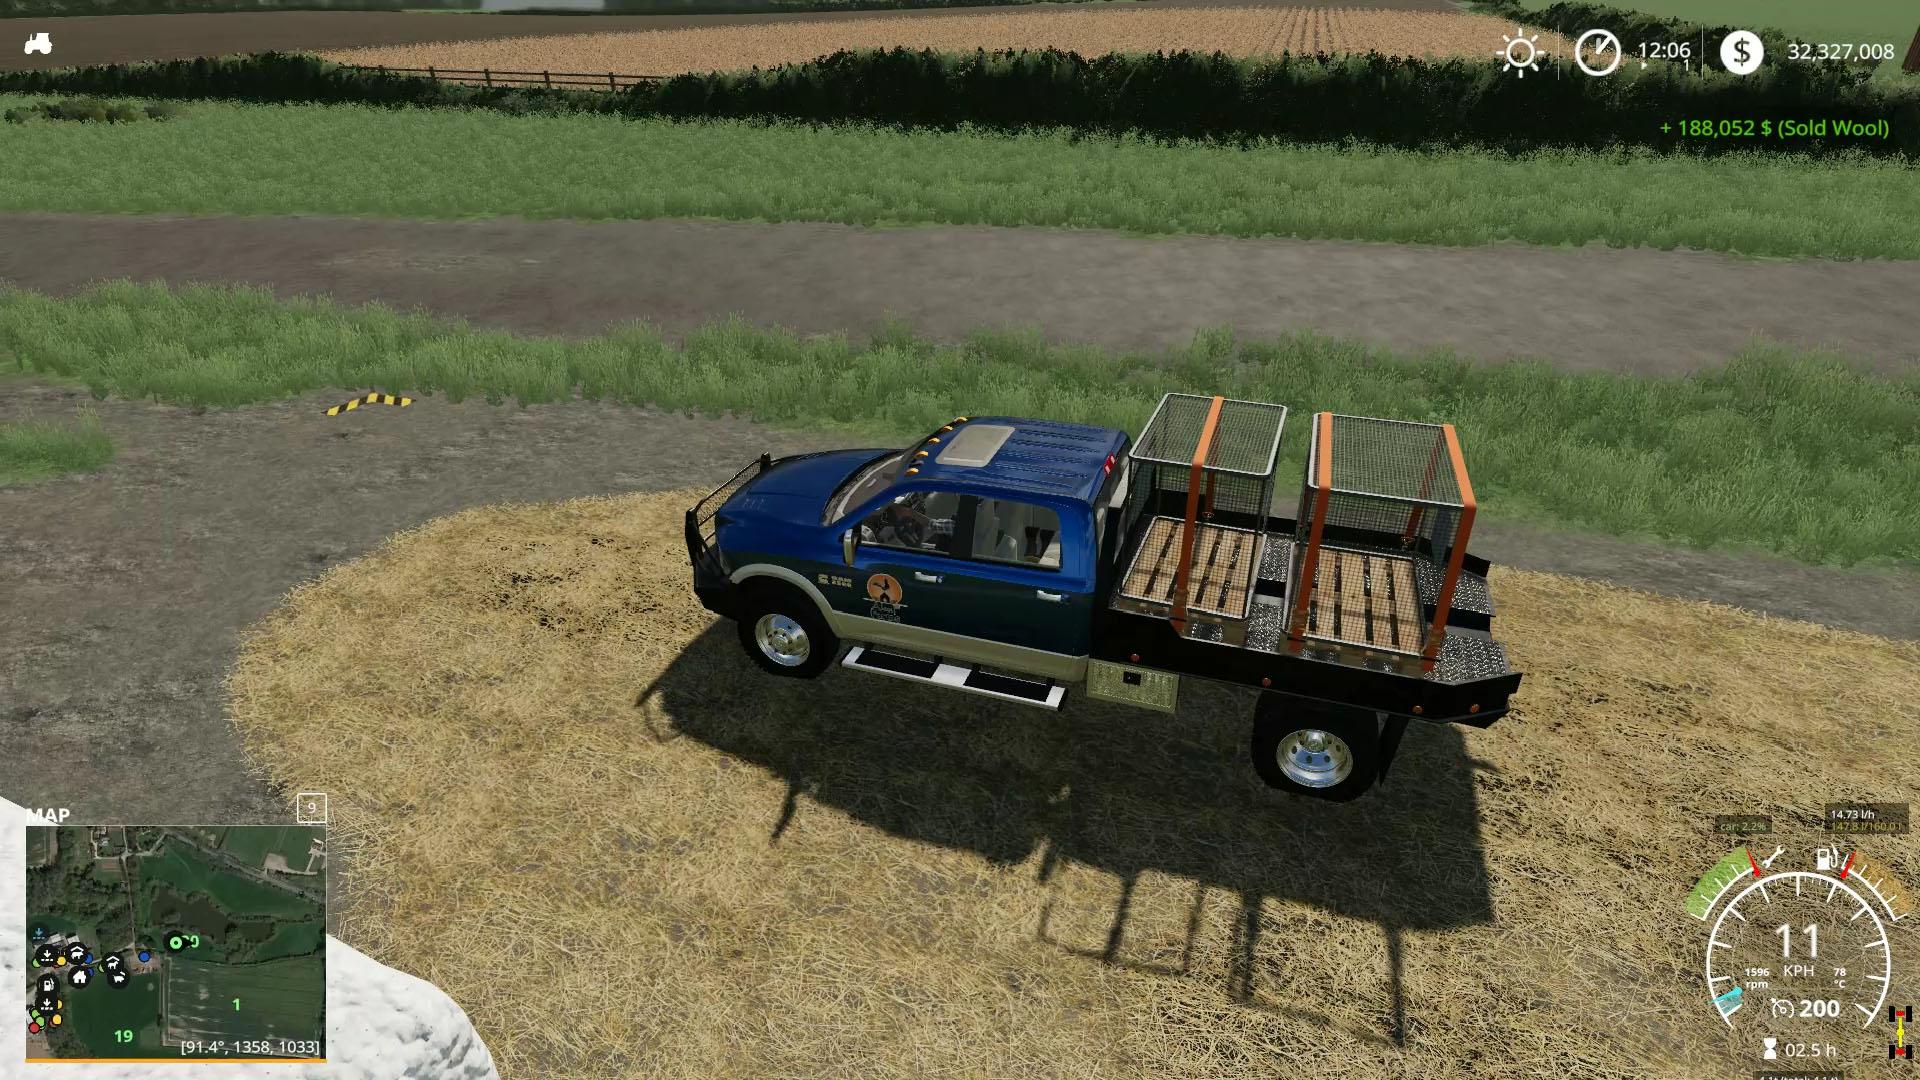 how to move hay bales farming simulator 14